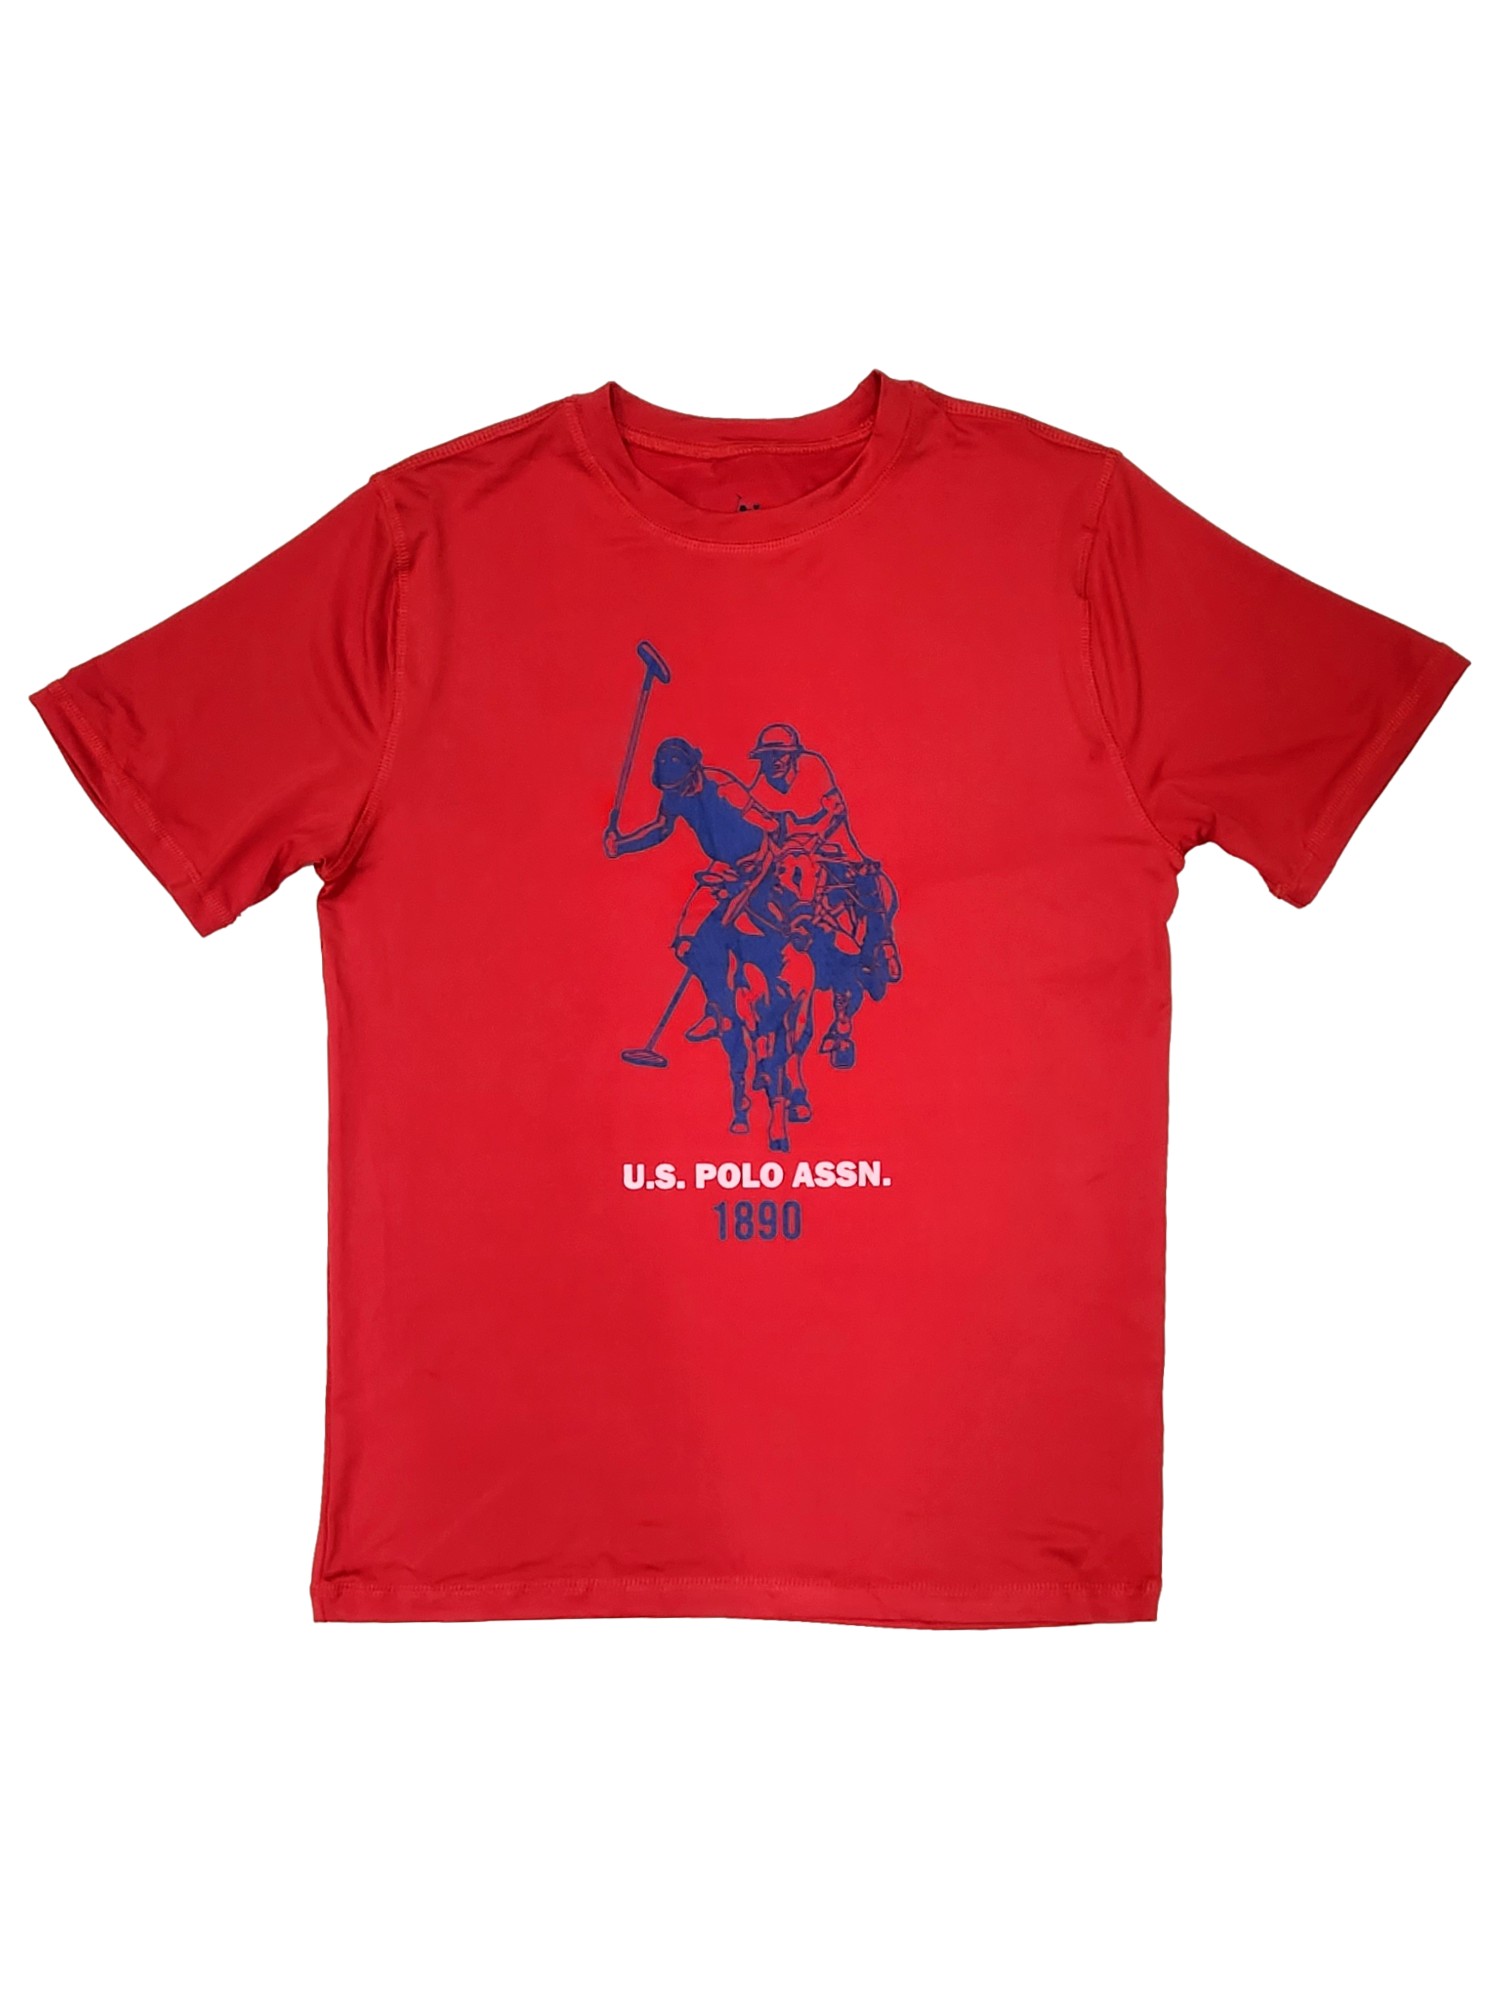 U.S. Polo Assn. Boys Red & Blue UPF 50 Rash Guard Swim Shirt